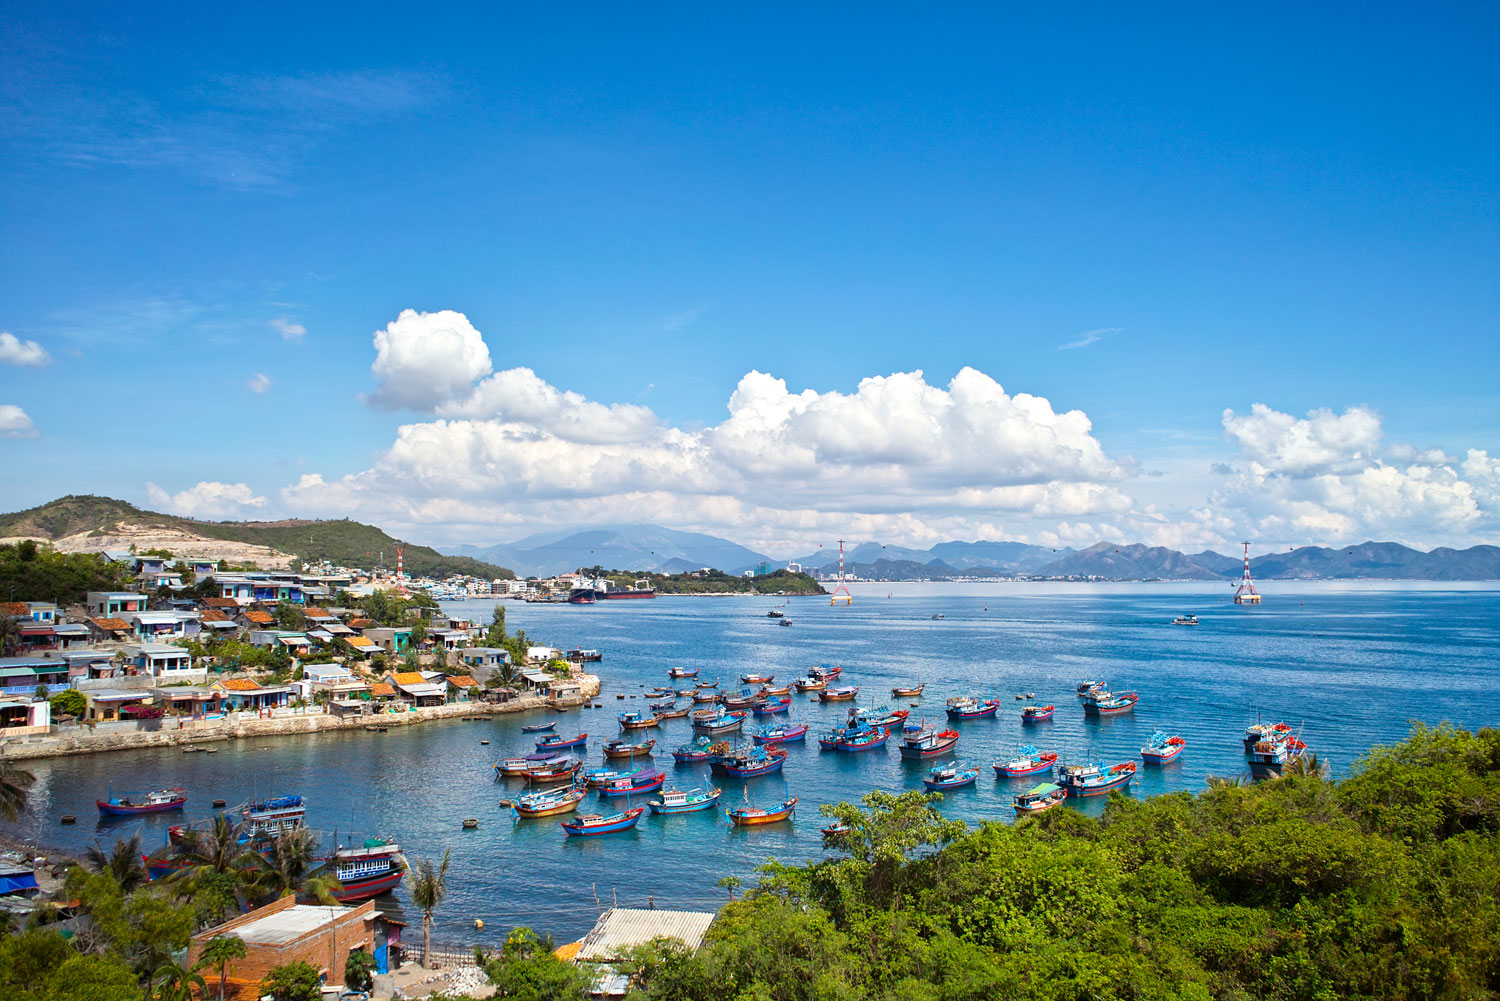 Nha Trang wears the title of Vietnam's hustling, bustling beach capital.